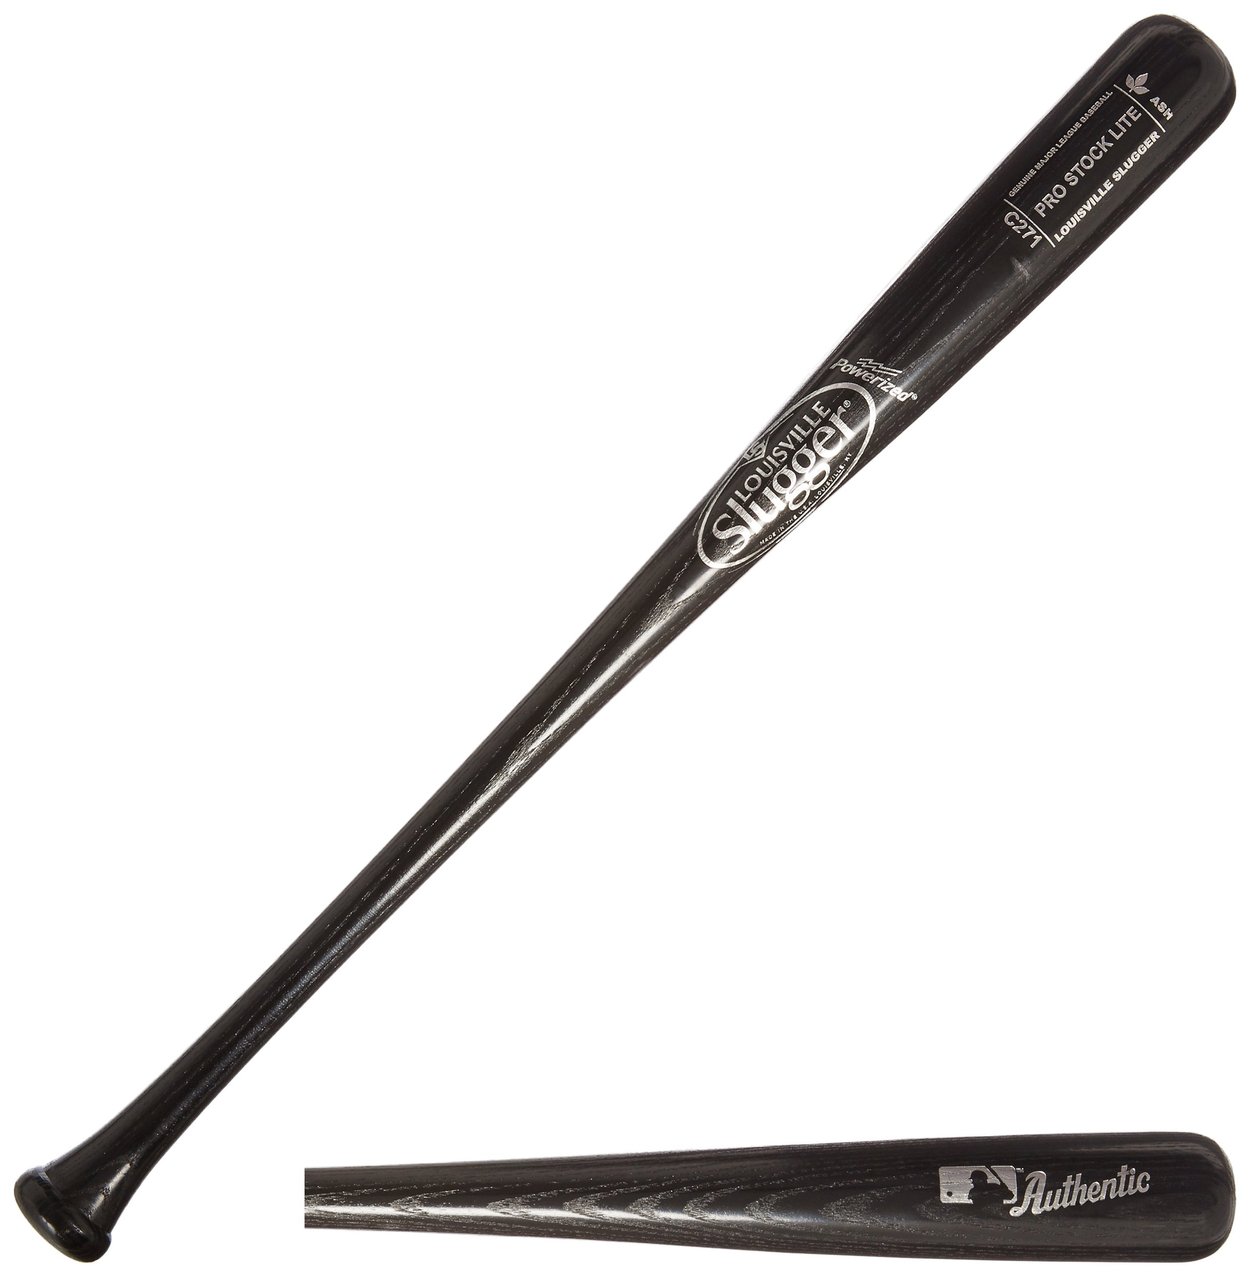 louisivlle-slugger-pro-lite-c271-black-5-wood-baseball-bat-31-inch WBPL271-BK-31 inch Louisville 044277054458 The Louisville Slugger Pro Stock Lite Wood Bat Series is made